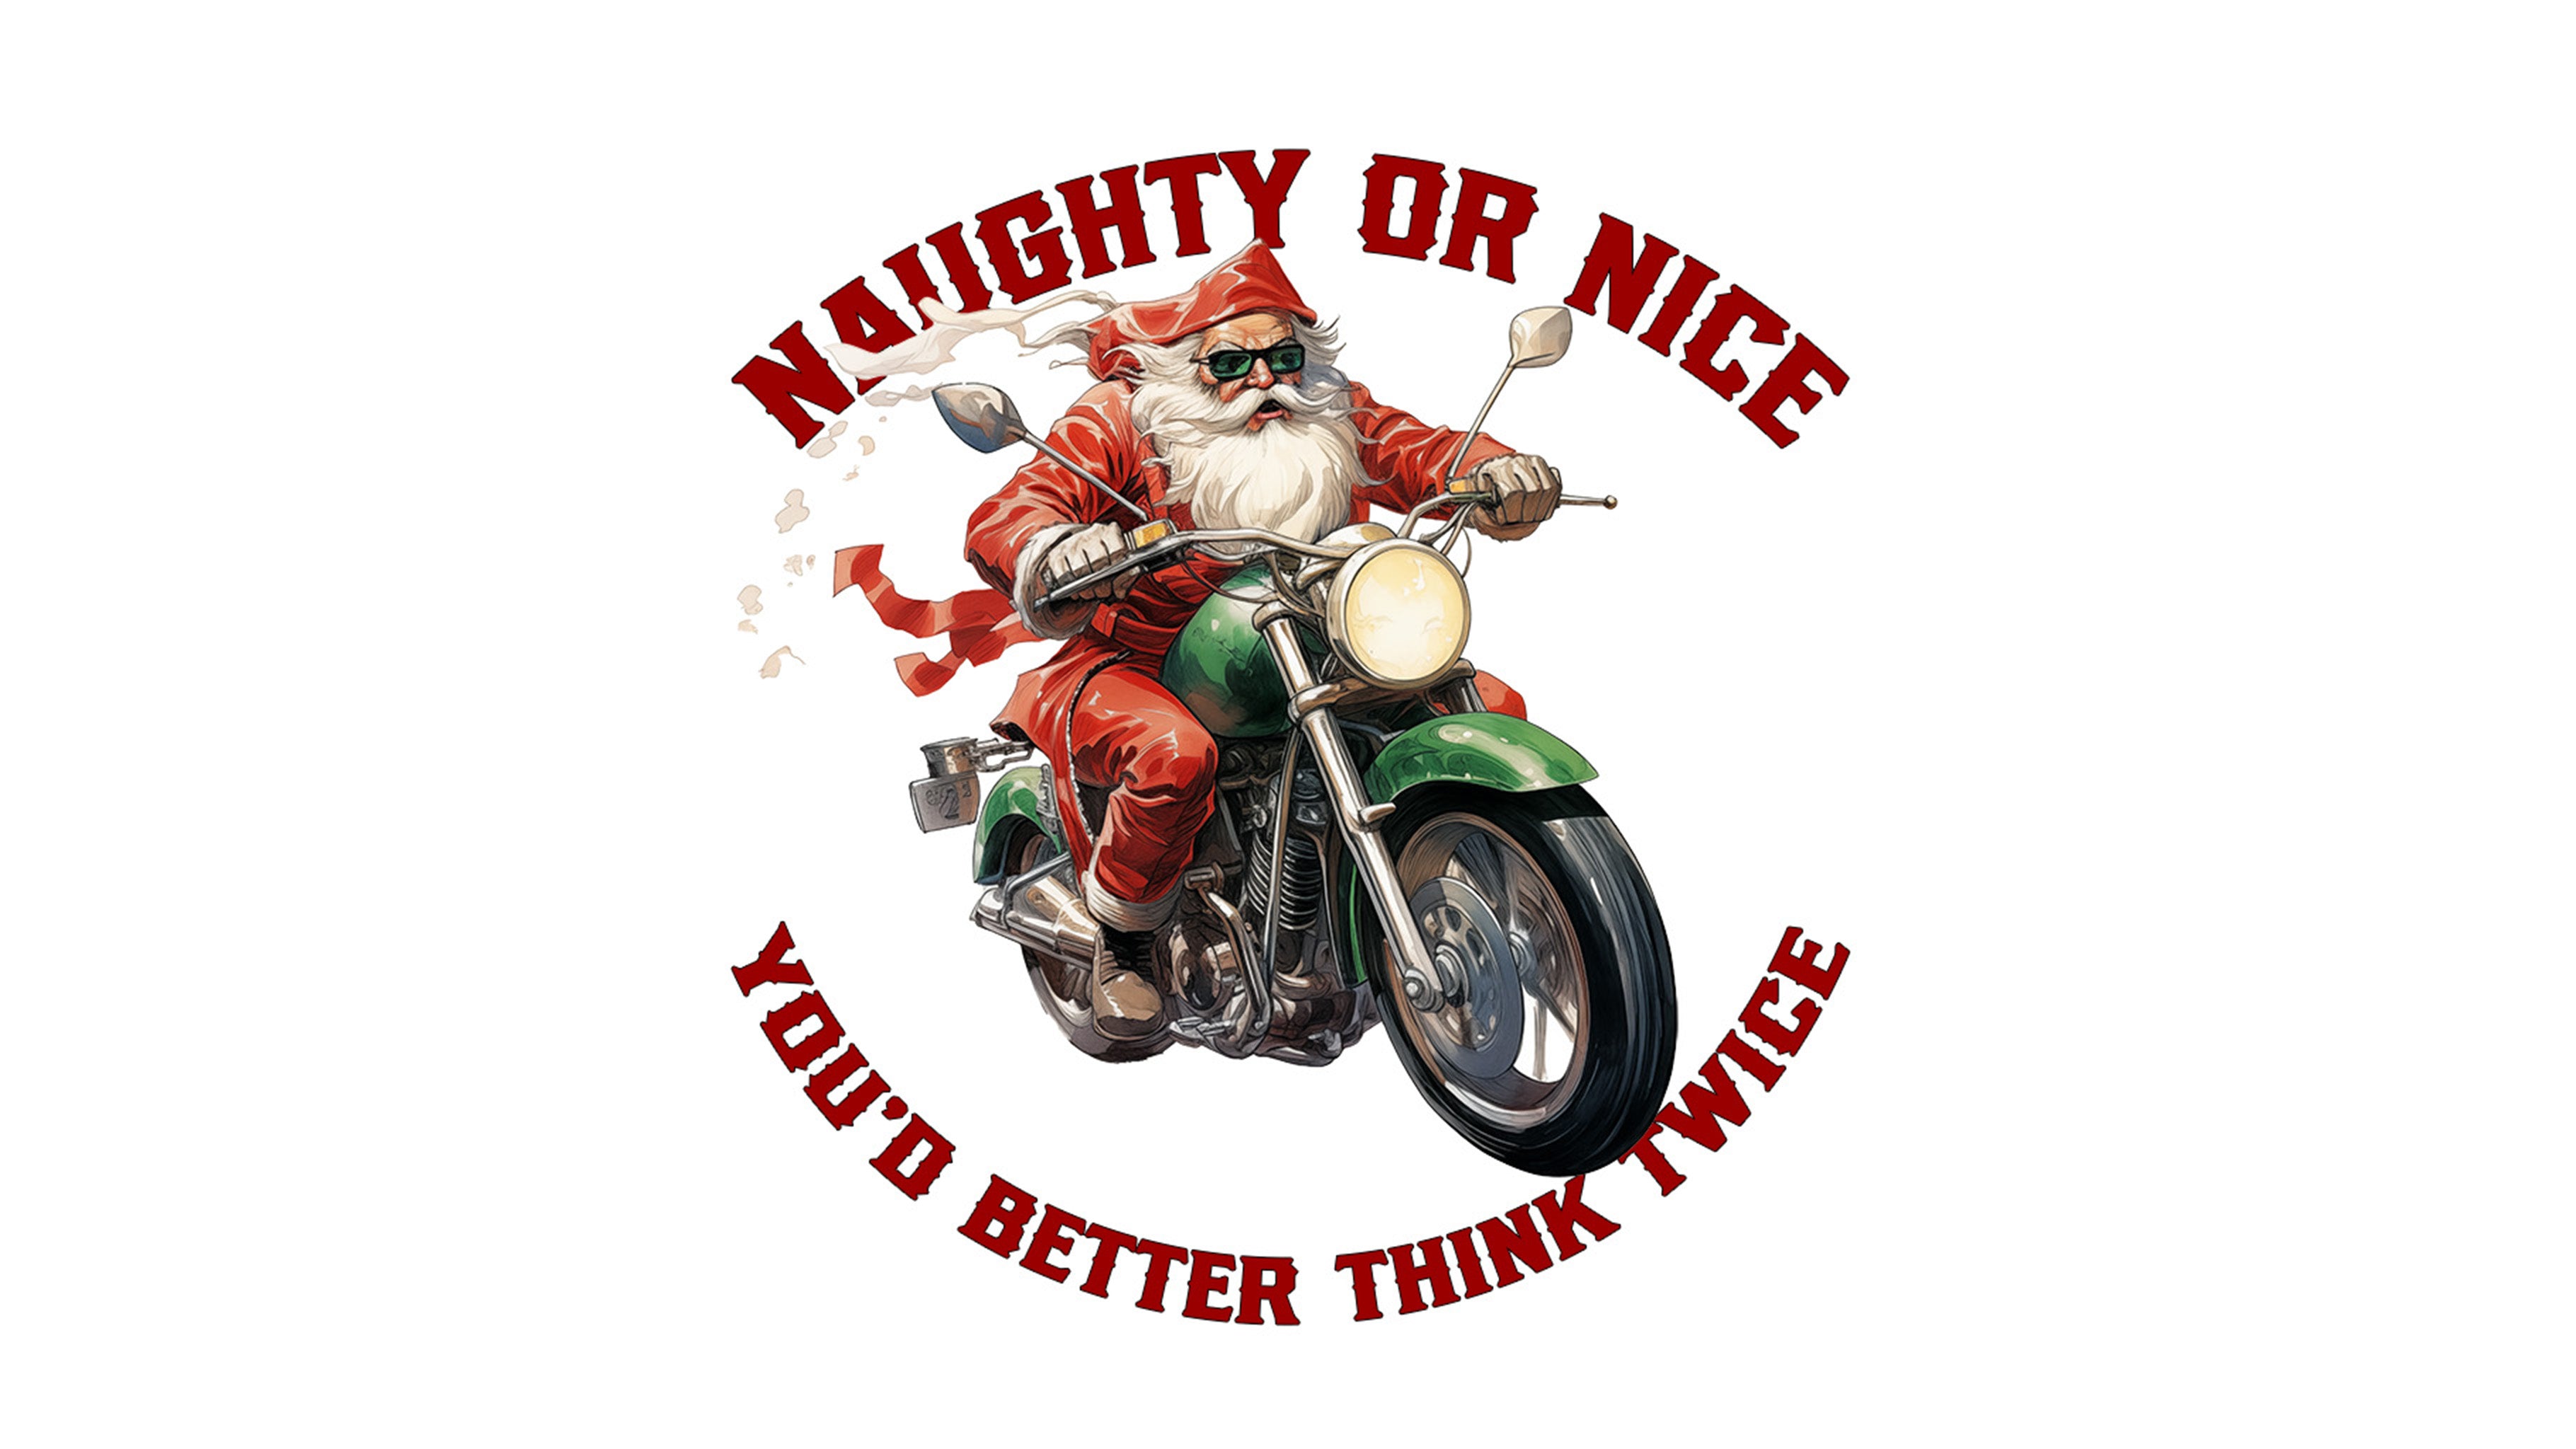 Super Santa Old School - "Naughty or Nice, You'd Better Think Twice" - Studio Ten Design